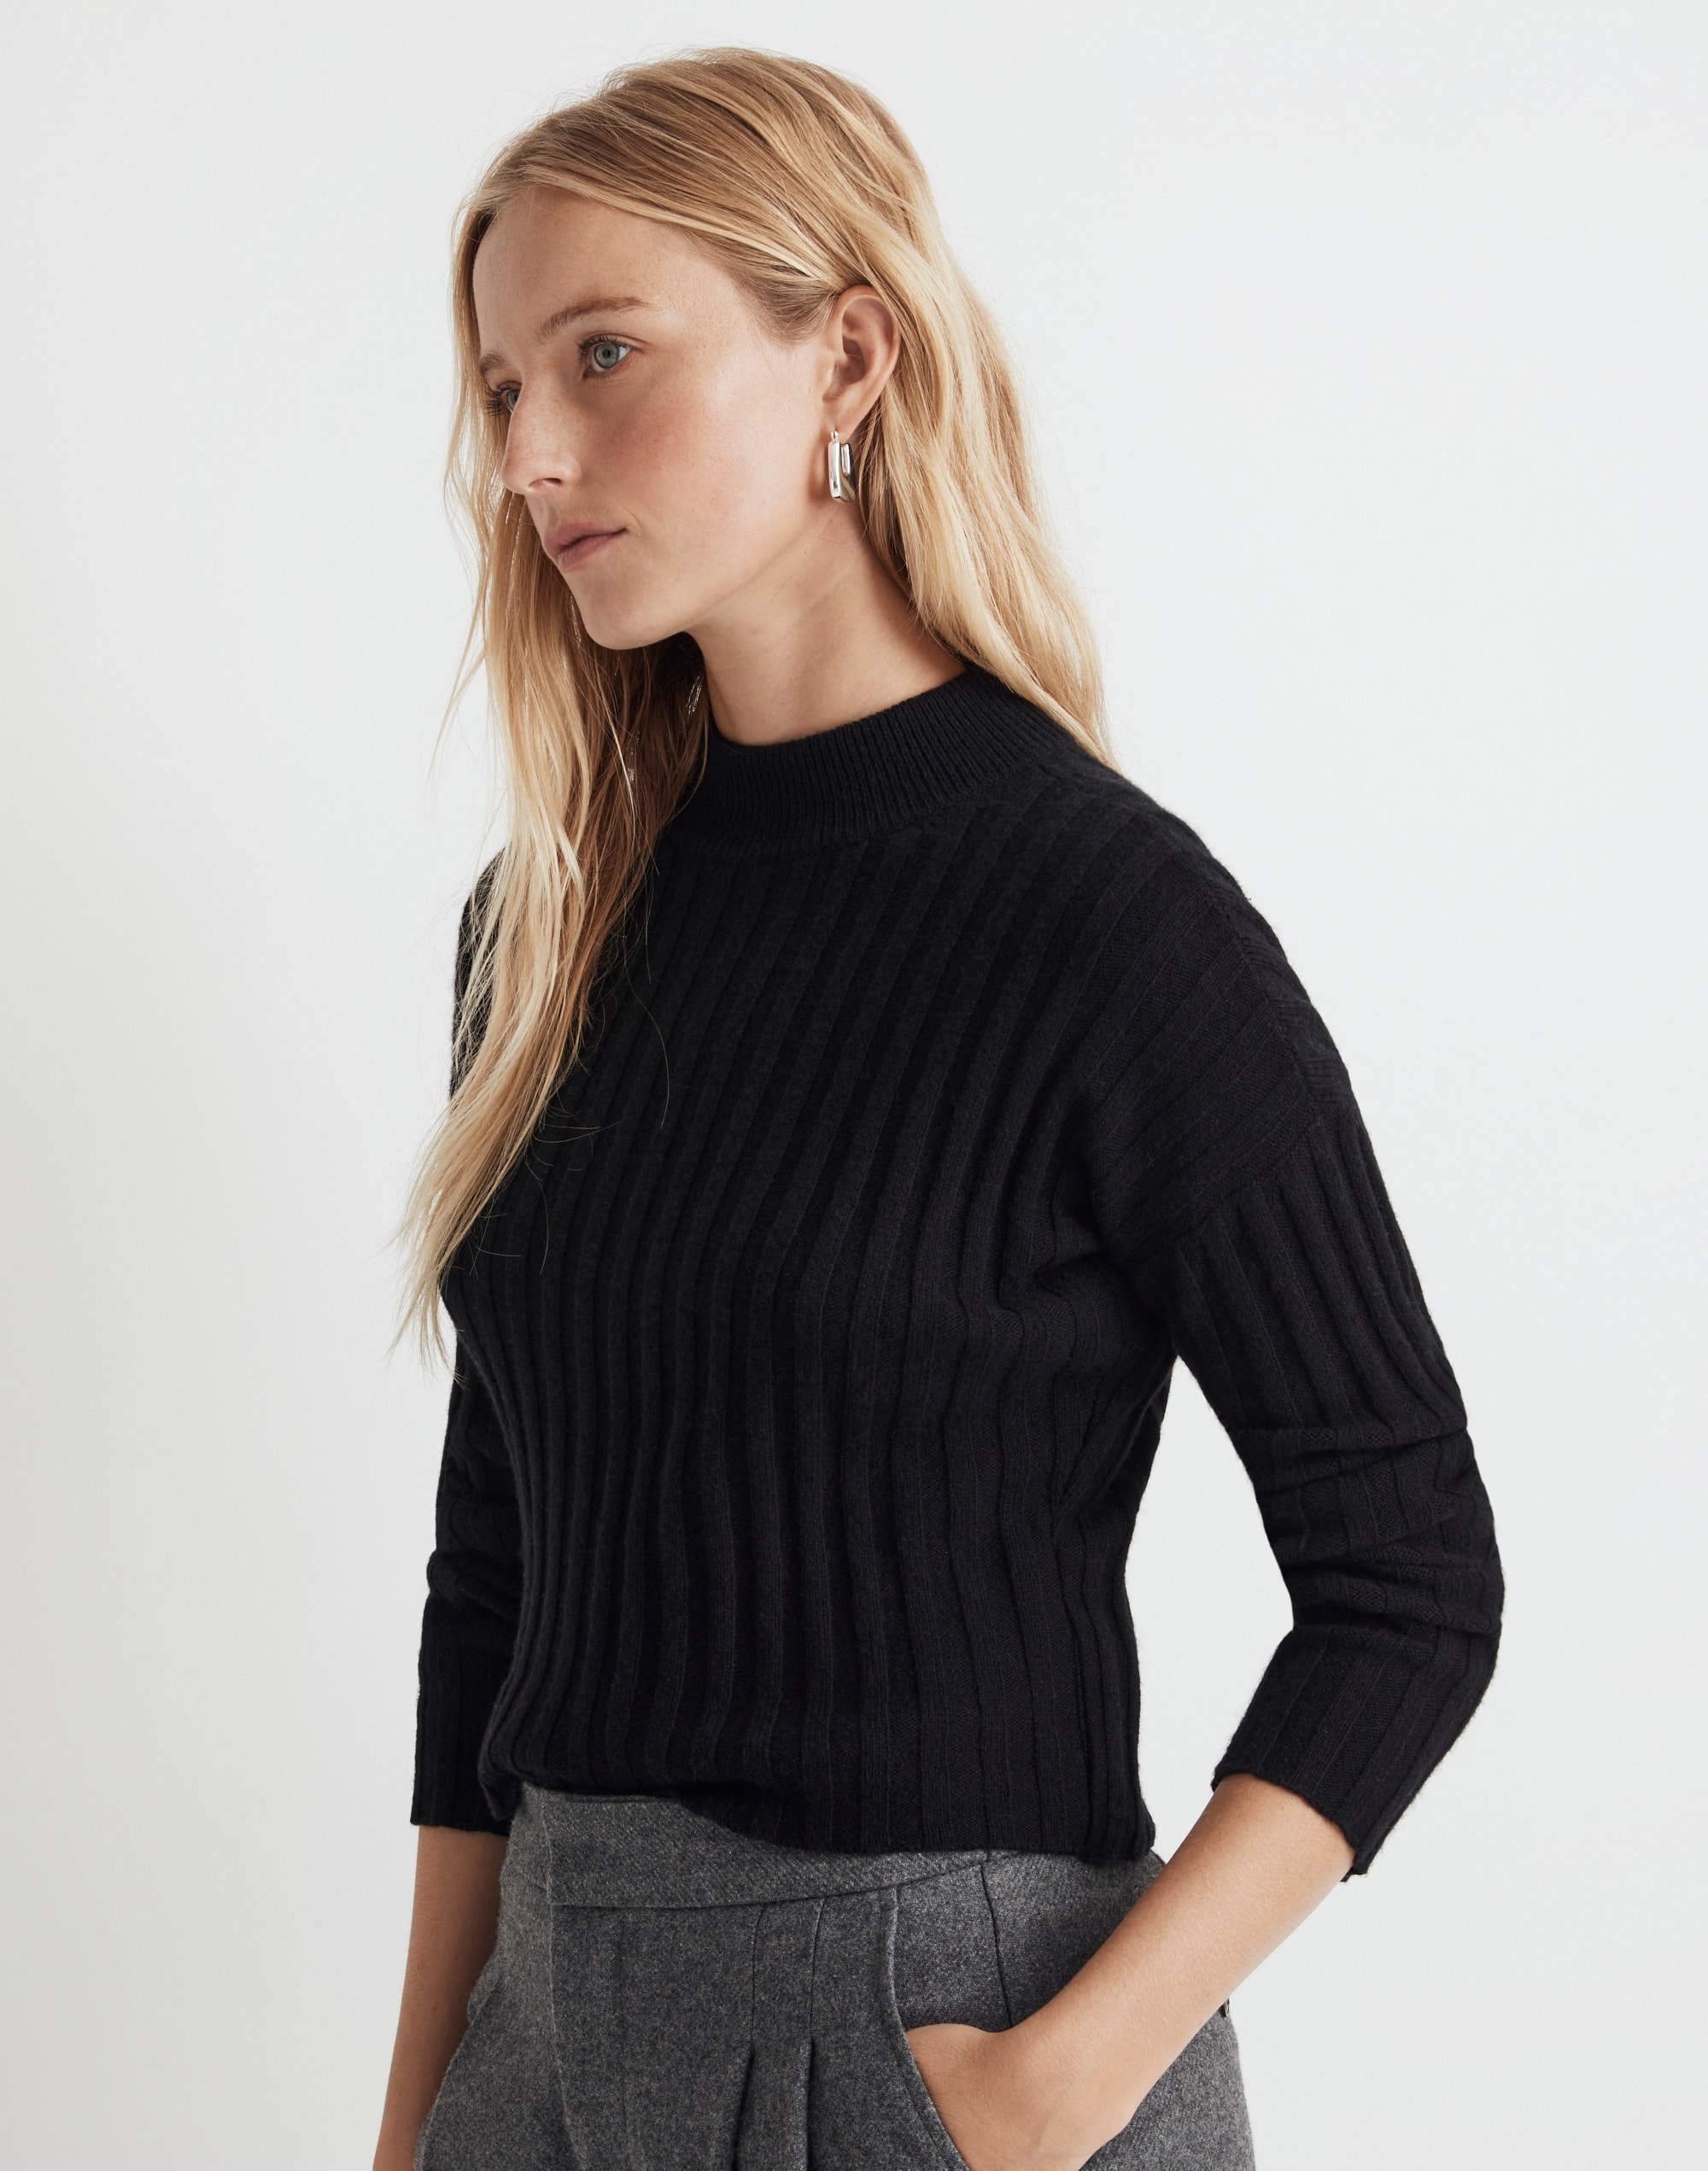 Mockneck Crop Sweater